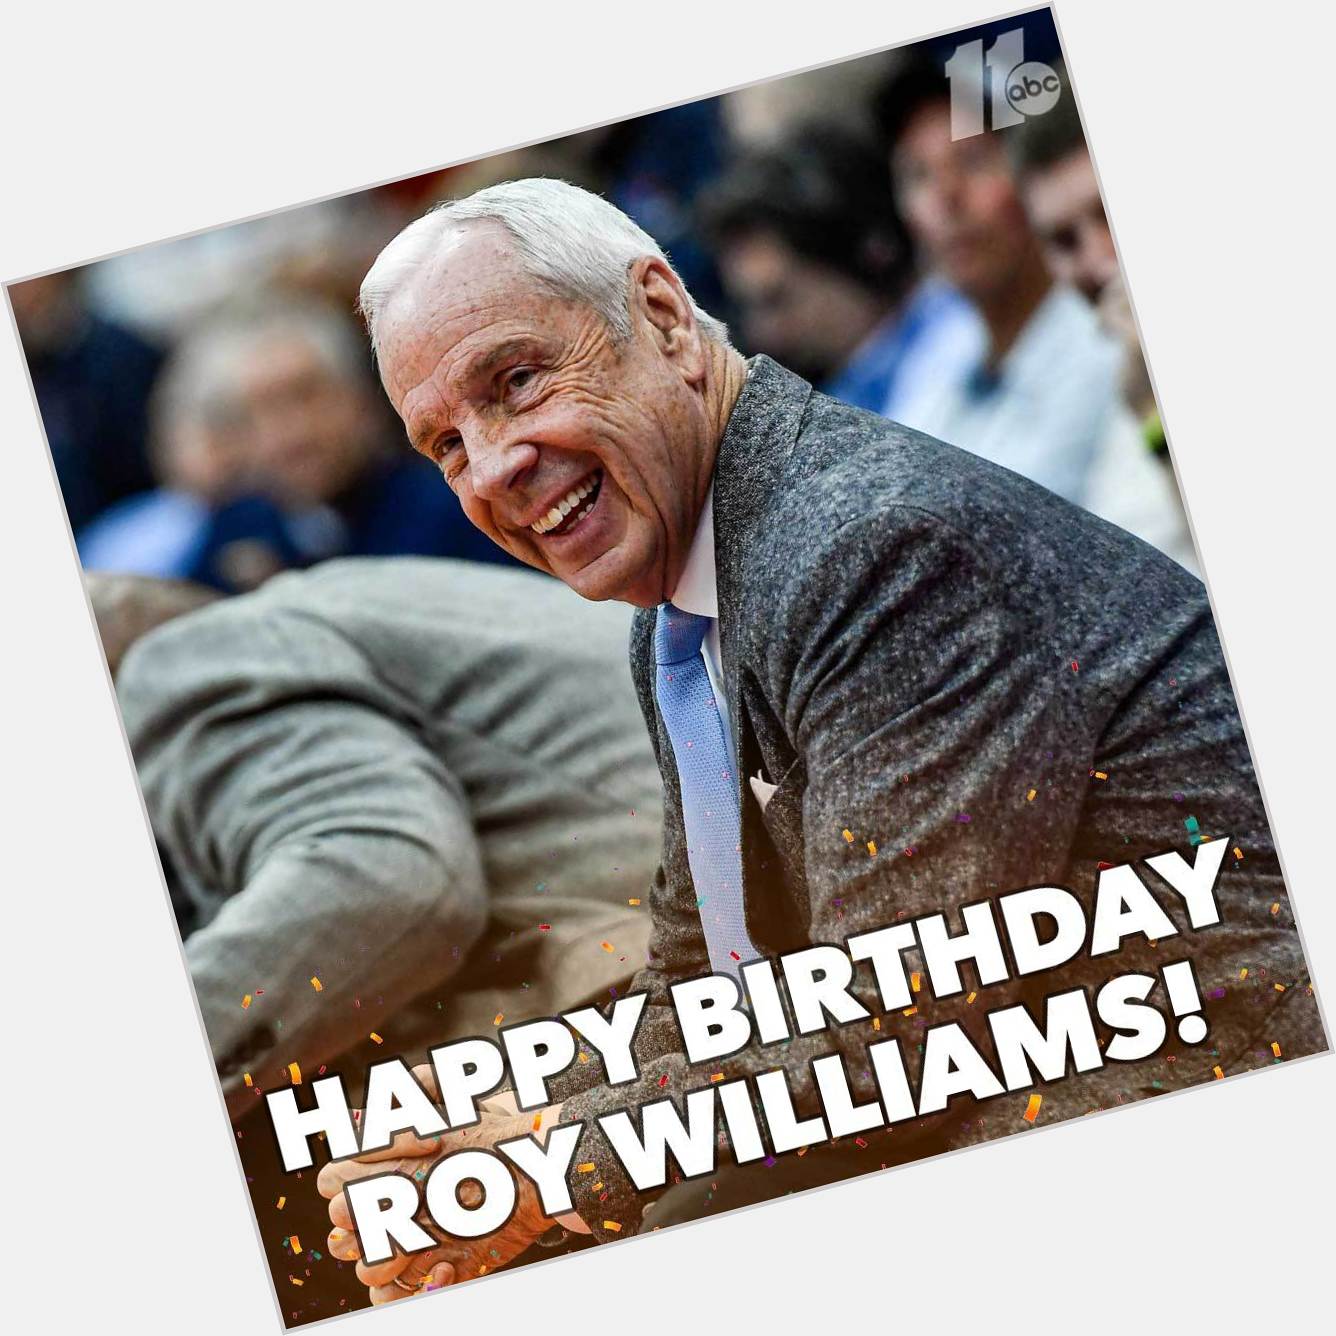 HAPPY BIRTHDAY, COACH! Join us in wishing UNC head coach Roy Williams a very happy 70th birthday!  